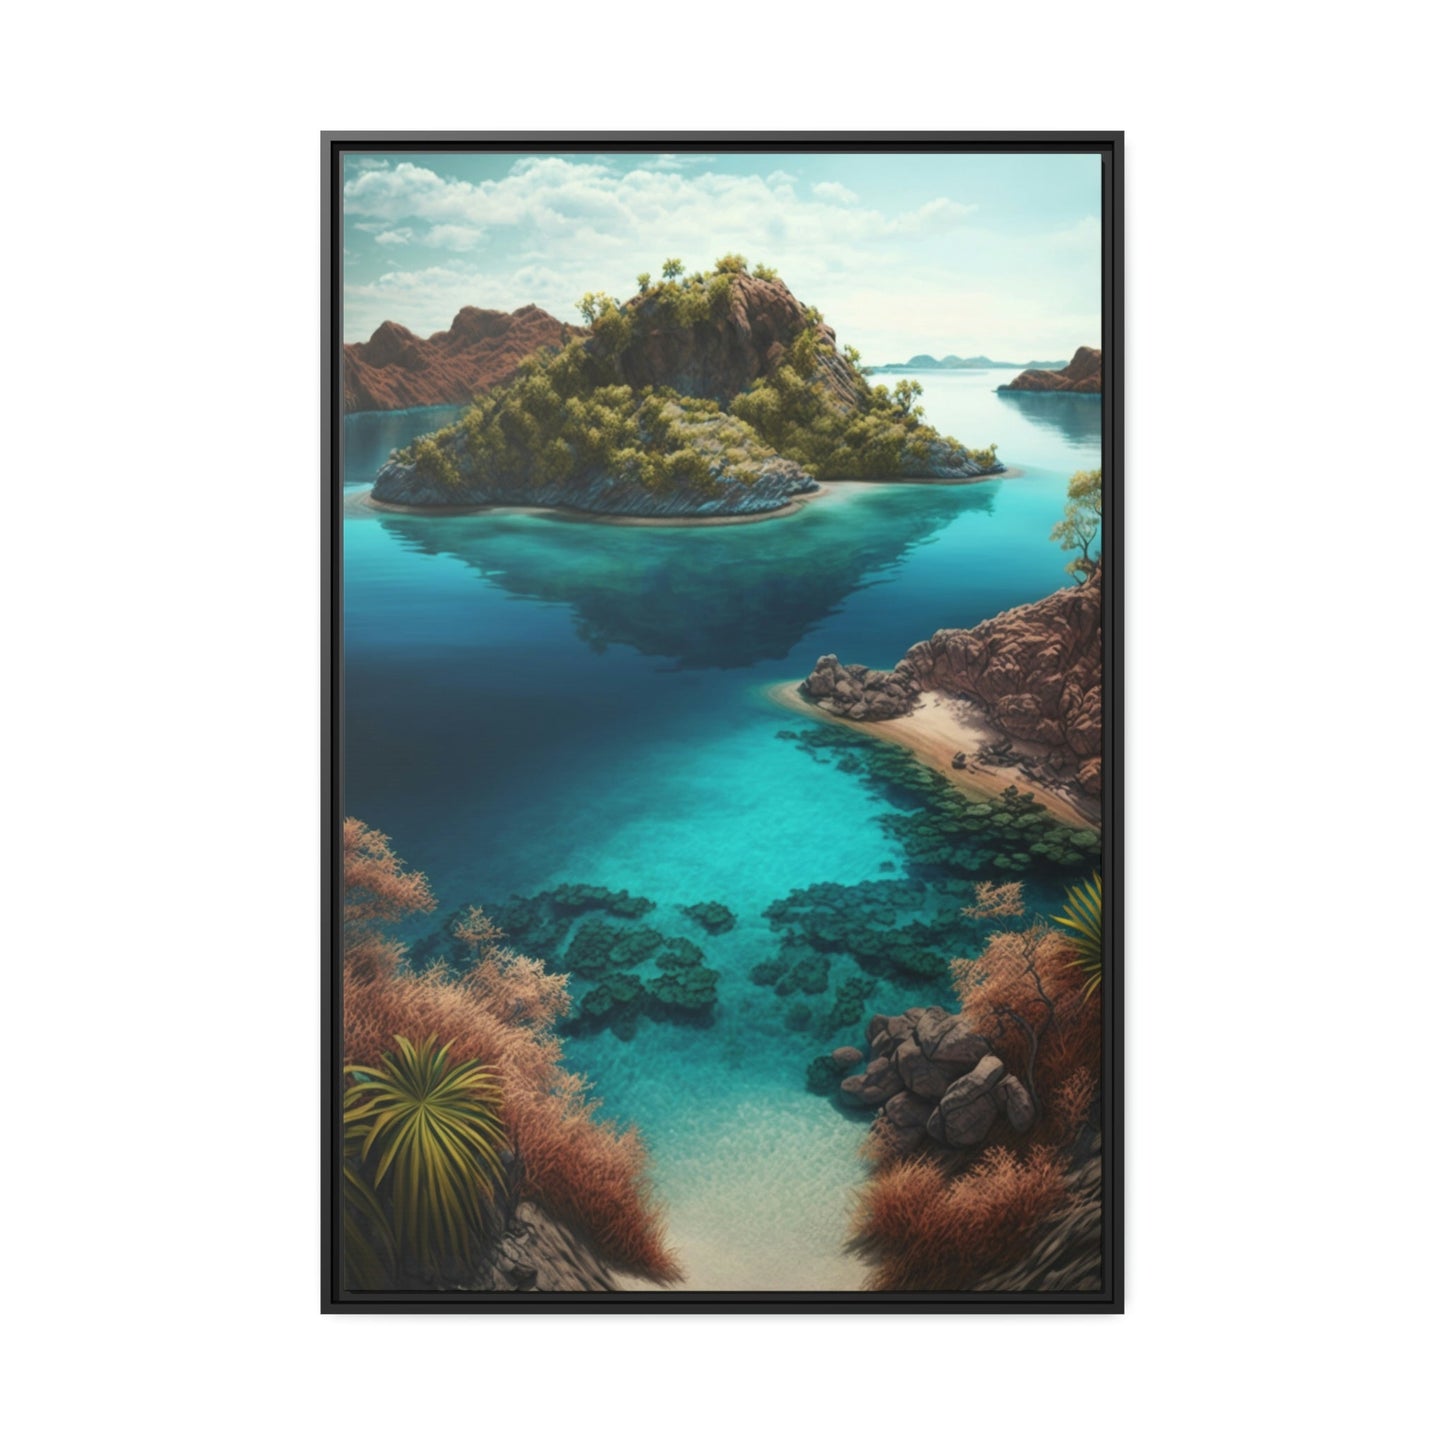 Tropical Paradise: A Vibrant and Lush Canvas Print